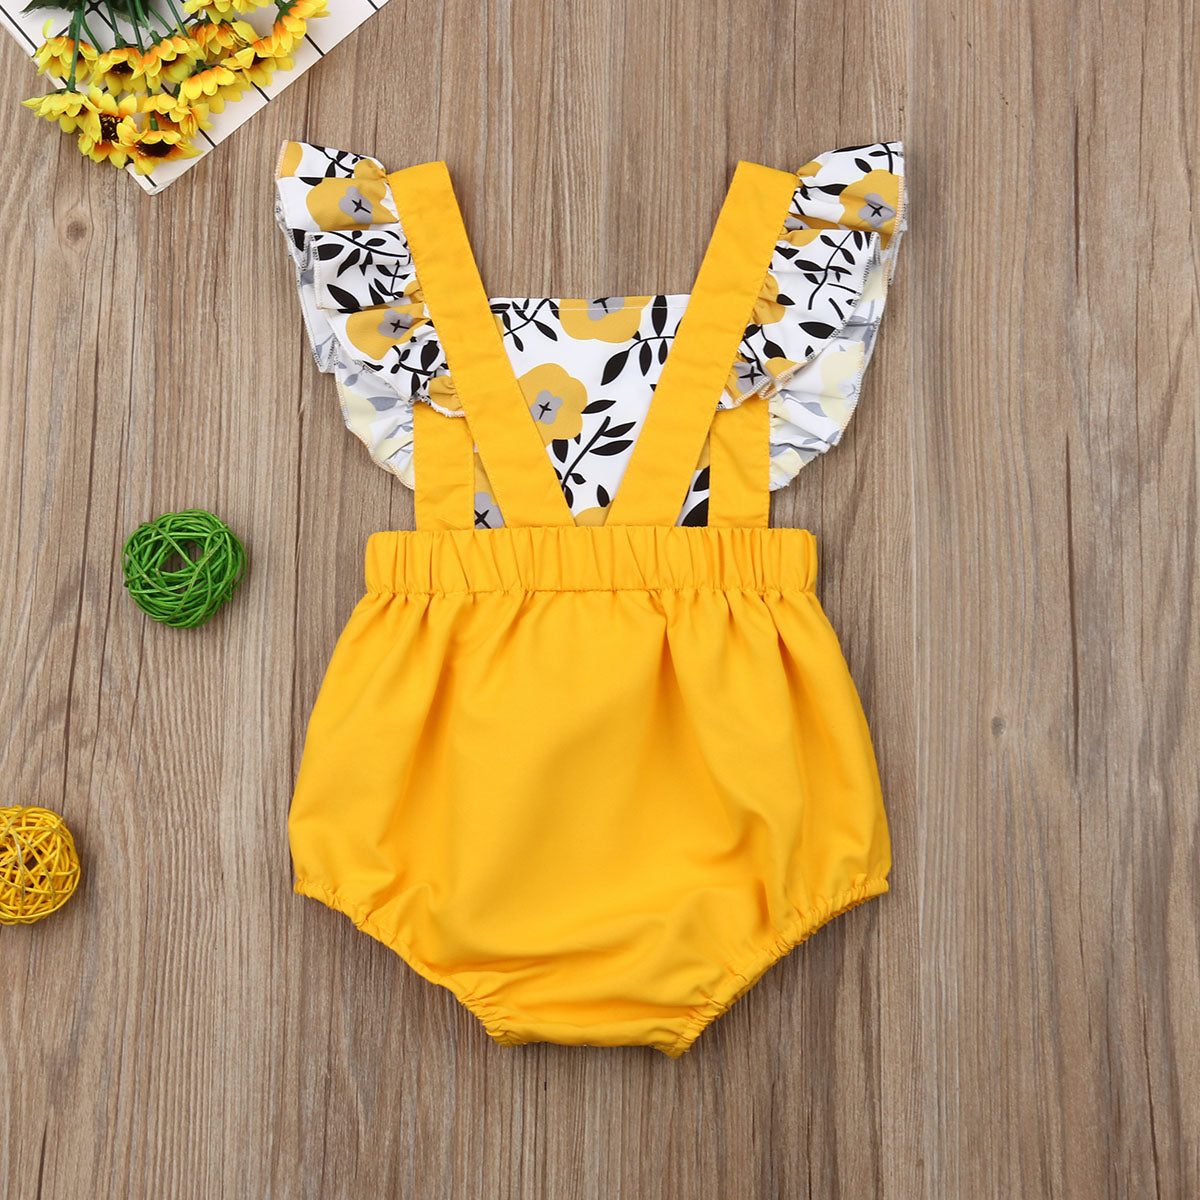 Pudcoco Summer Newborn Baby Girl Clothes Fly Sleeve Sunflower Print